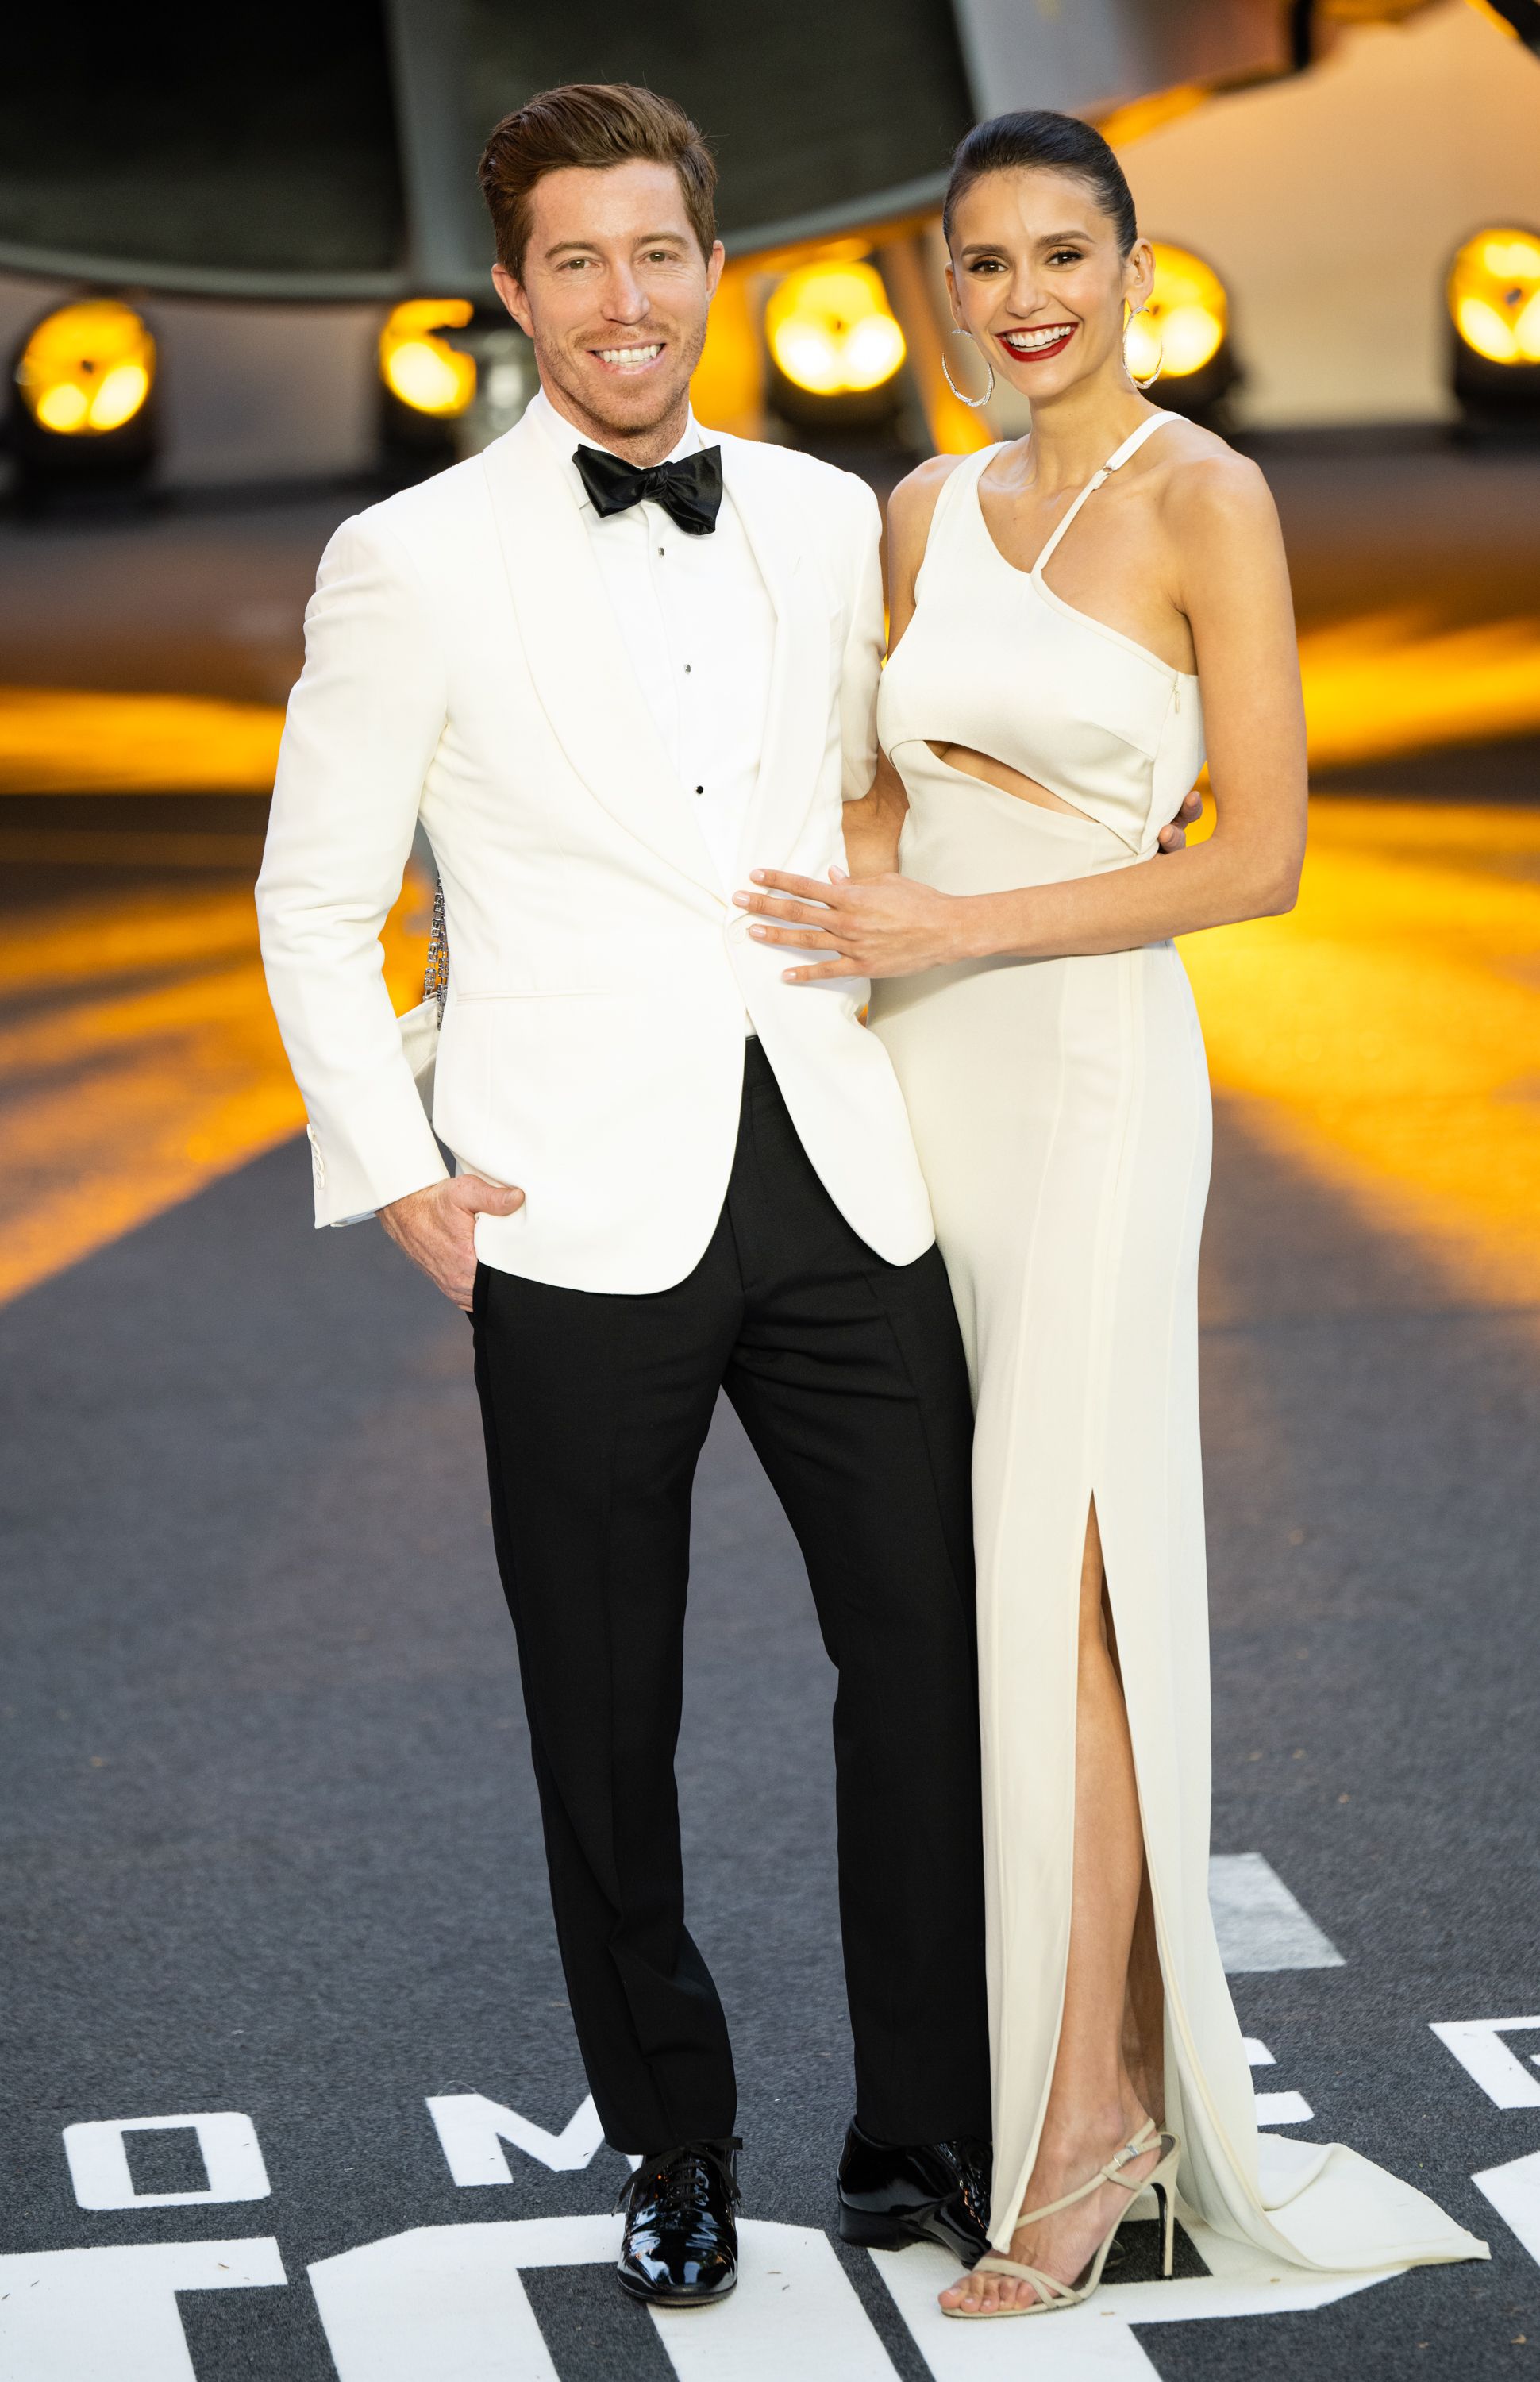 Nina Dobrev And Boyfriend Shaun Whites Relationship Timeline image picture